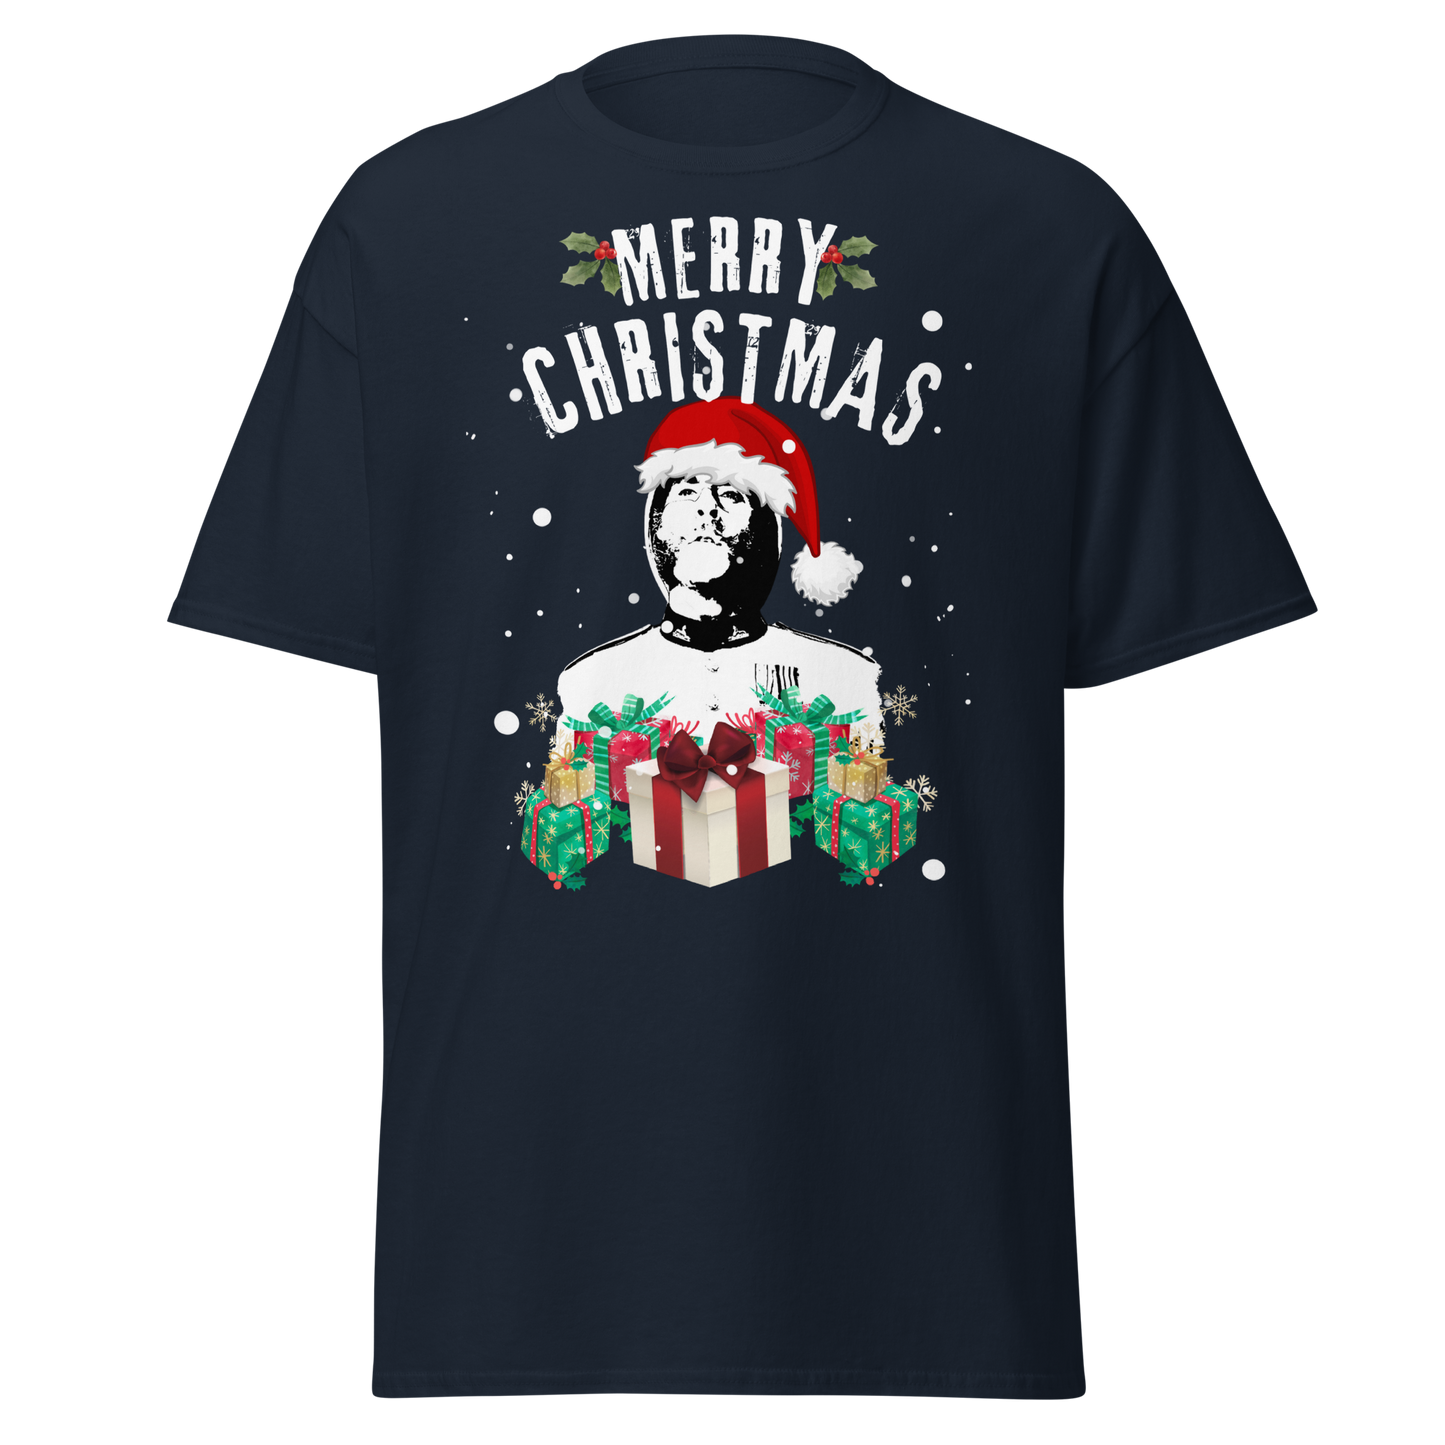 Merry Christmas (Festive t-shirt)